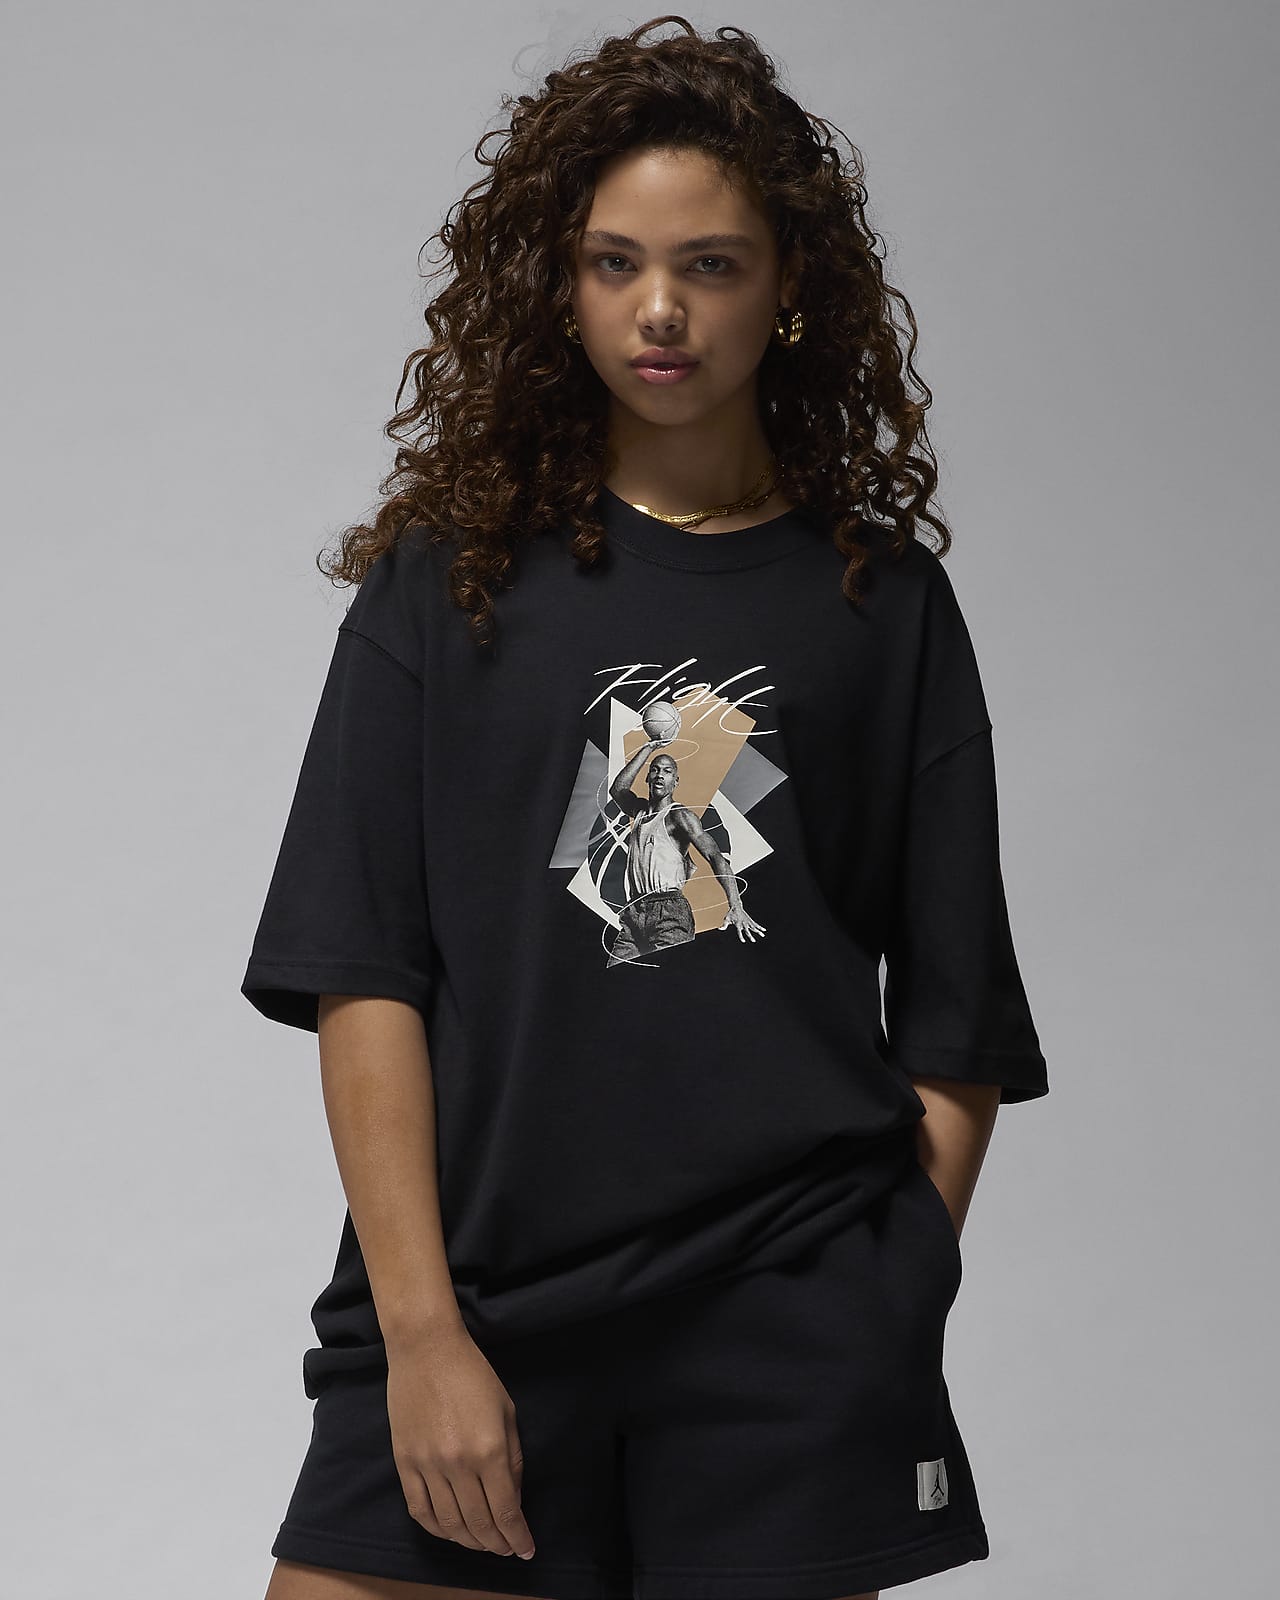 Jordan Women's Oversized Graphic T-Shirt